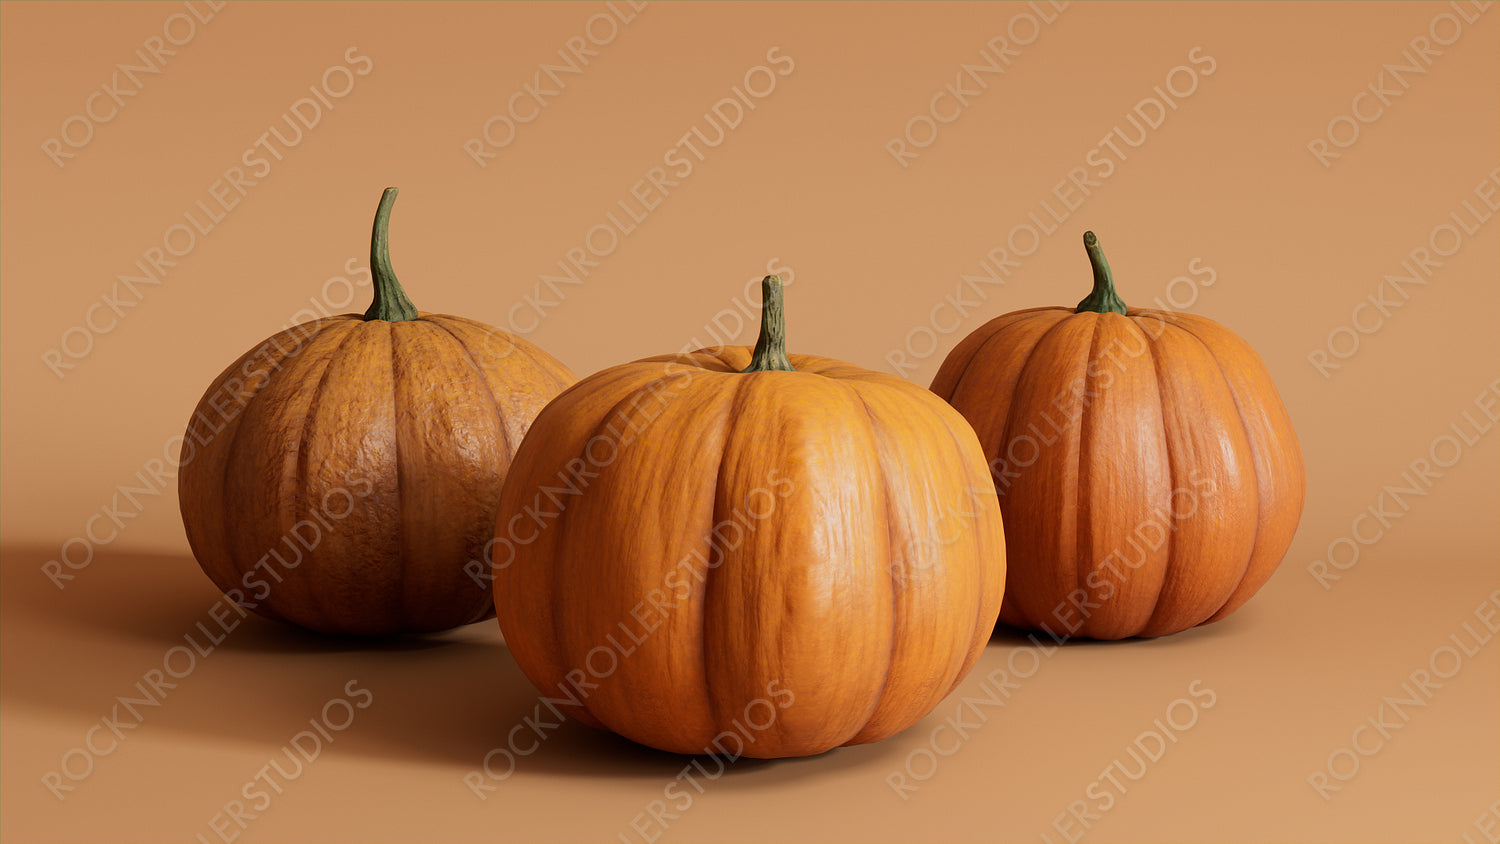 Seasonal background Wallpaper. Trio of Pumpkins on Warm Brown color. Autumn Concept.